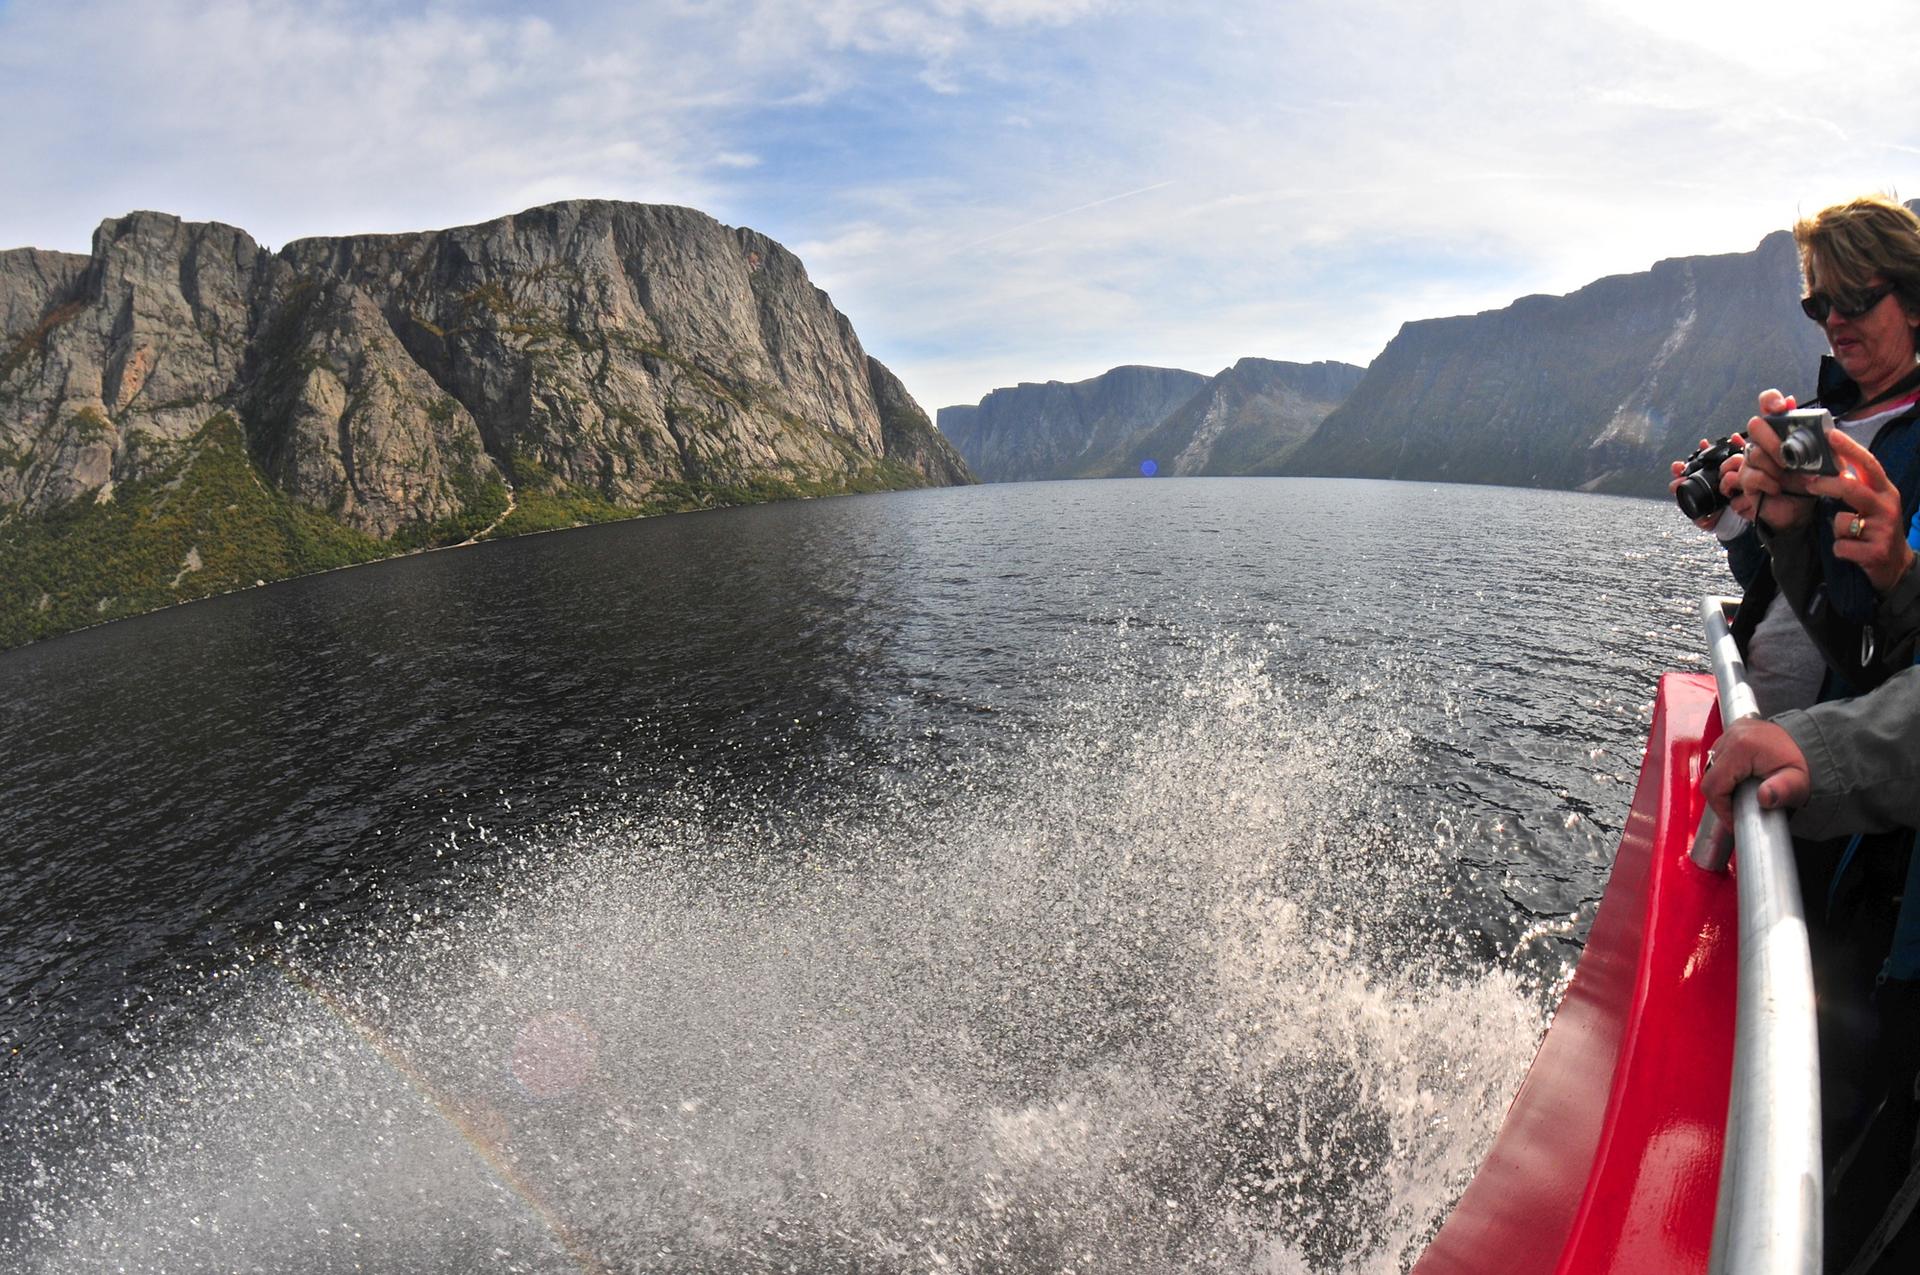 Explore the fjord with BonTours